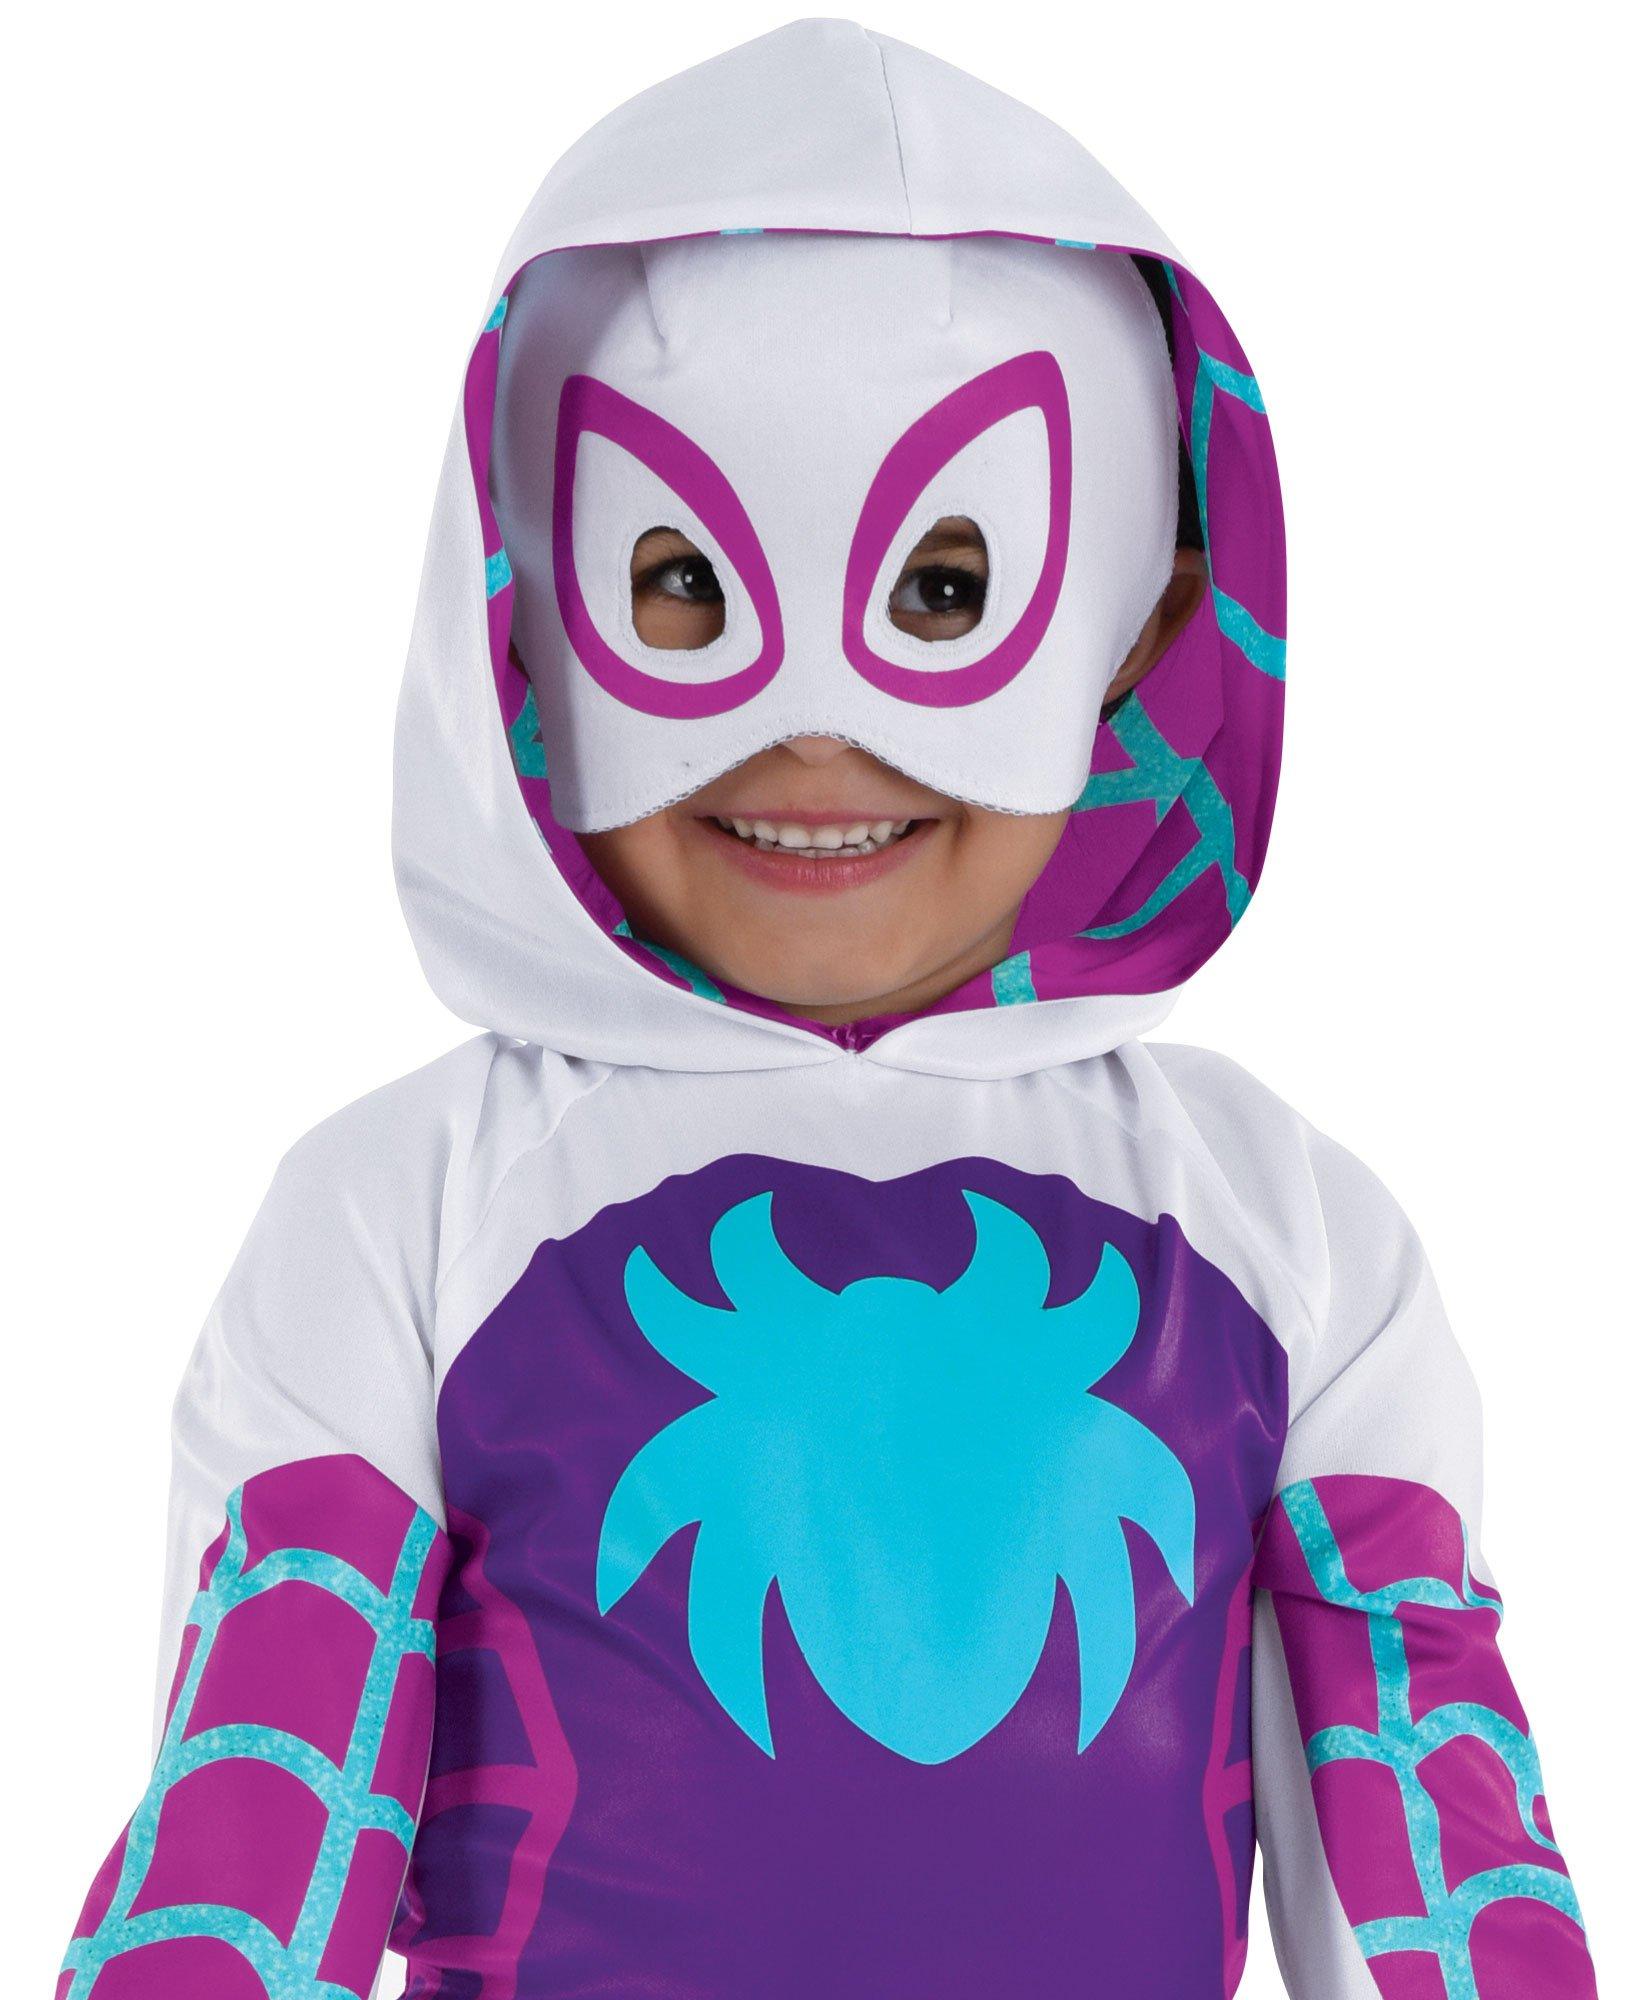 Kids' Glow-in-the-Dark Ghost-Spider Costume